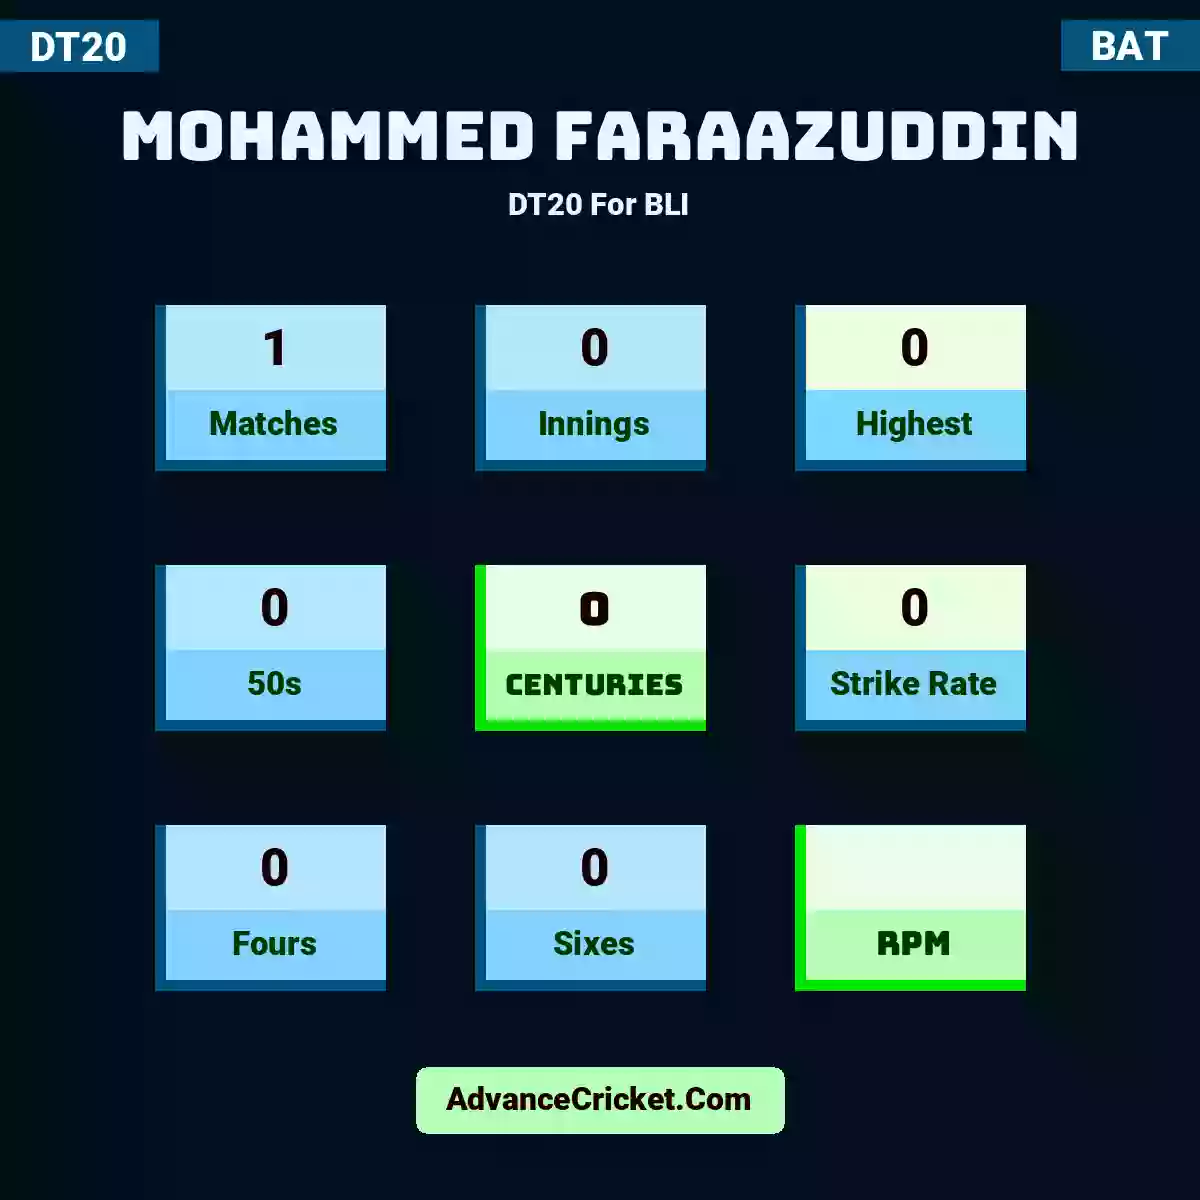 Mohammed Faraazuddin DT20  For BLI, Mohammed Faraazuddin played 1 matches, scored 0 runs as highest, 0 half-centuries, and 0 centuries, with a strike rate of 0. M.Faraazuddin hit 0 fours and 0 sixes.